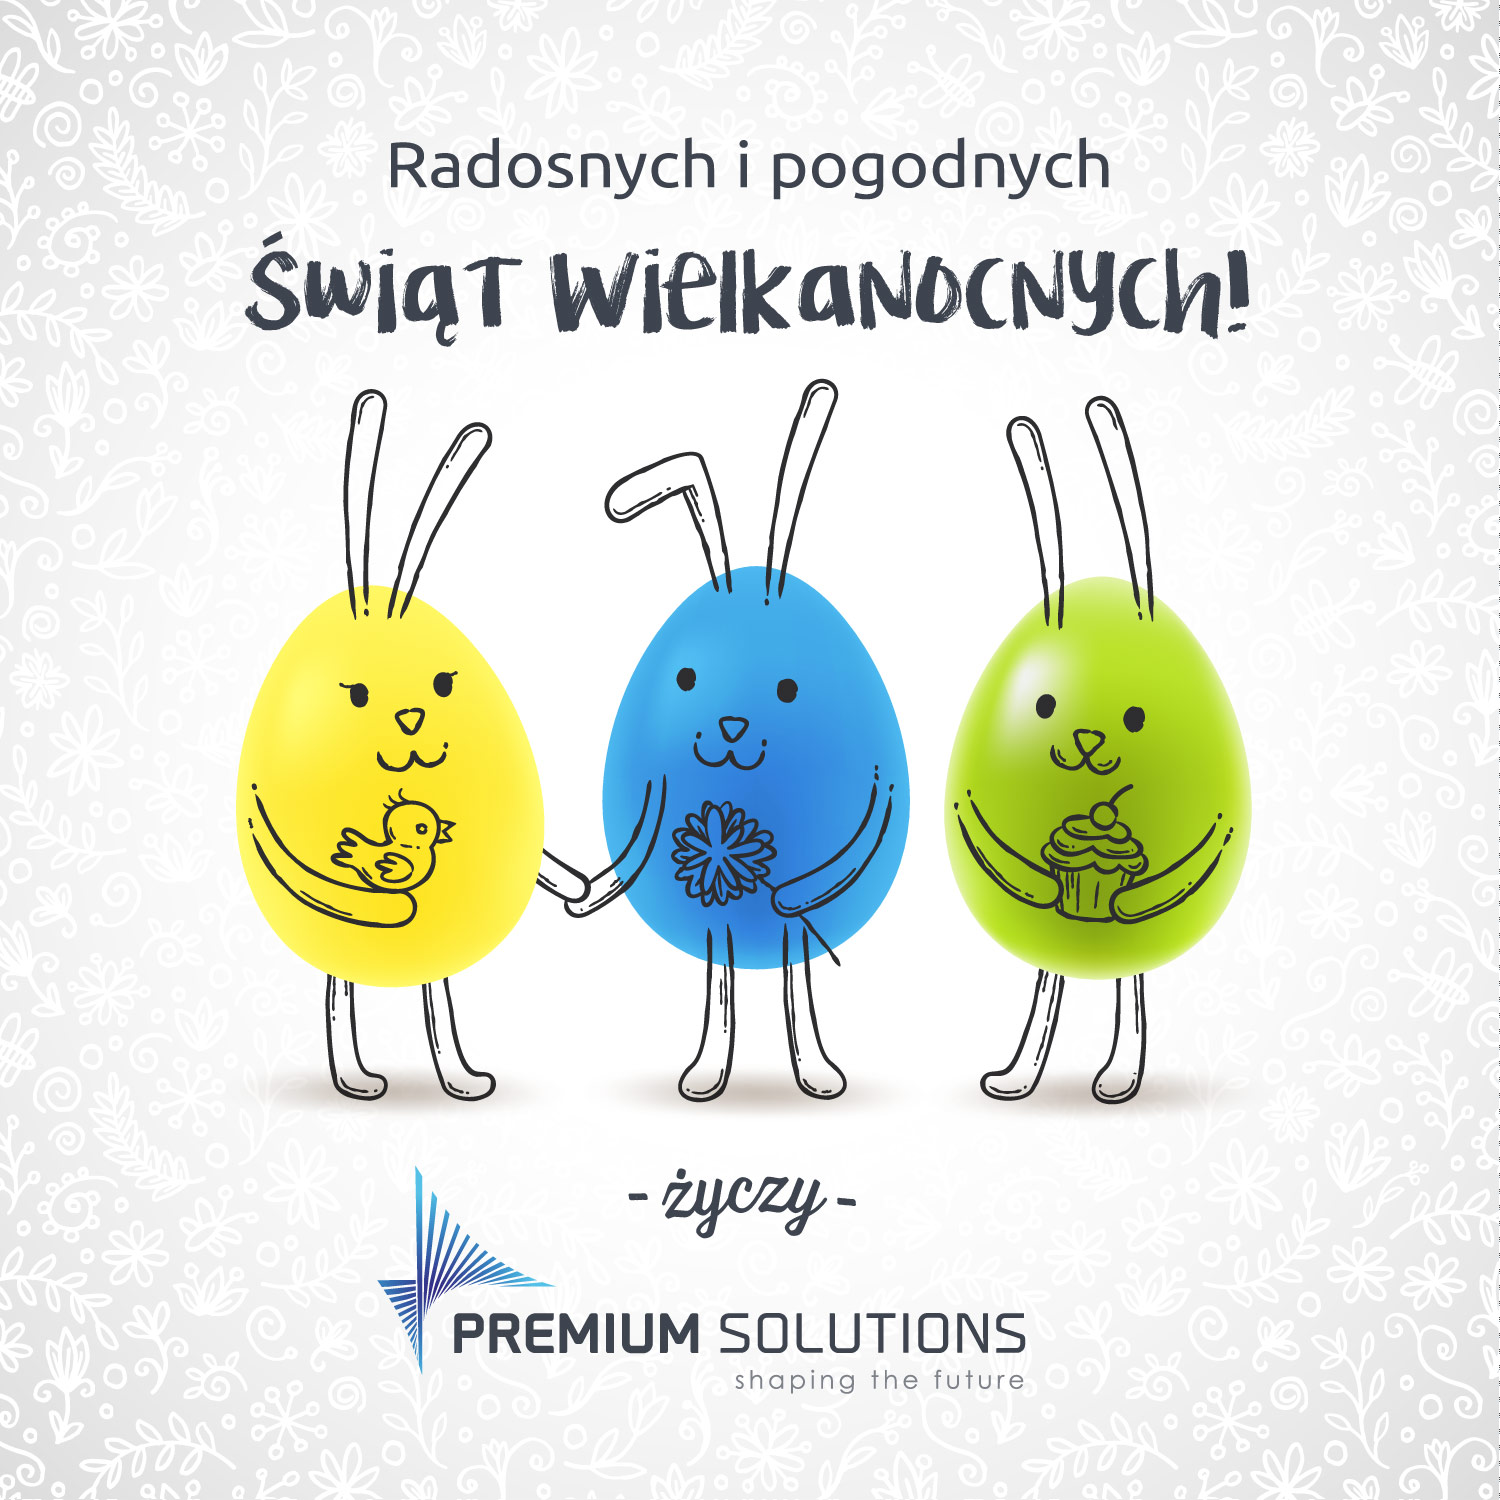 Kartka Świąteczna Premium Solutions Polska